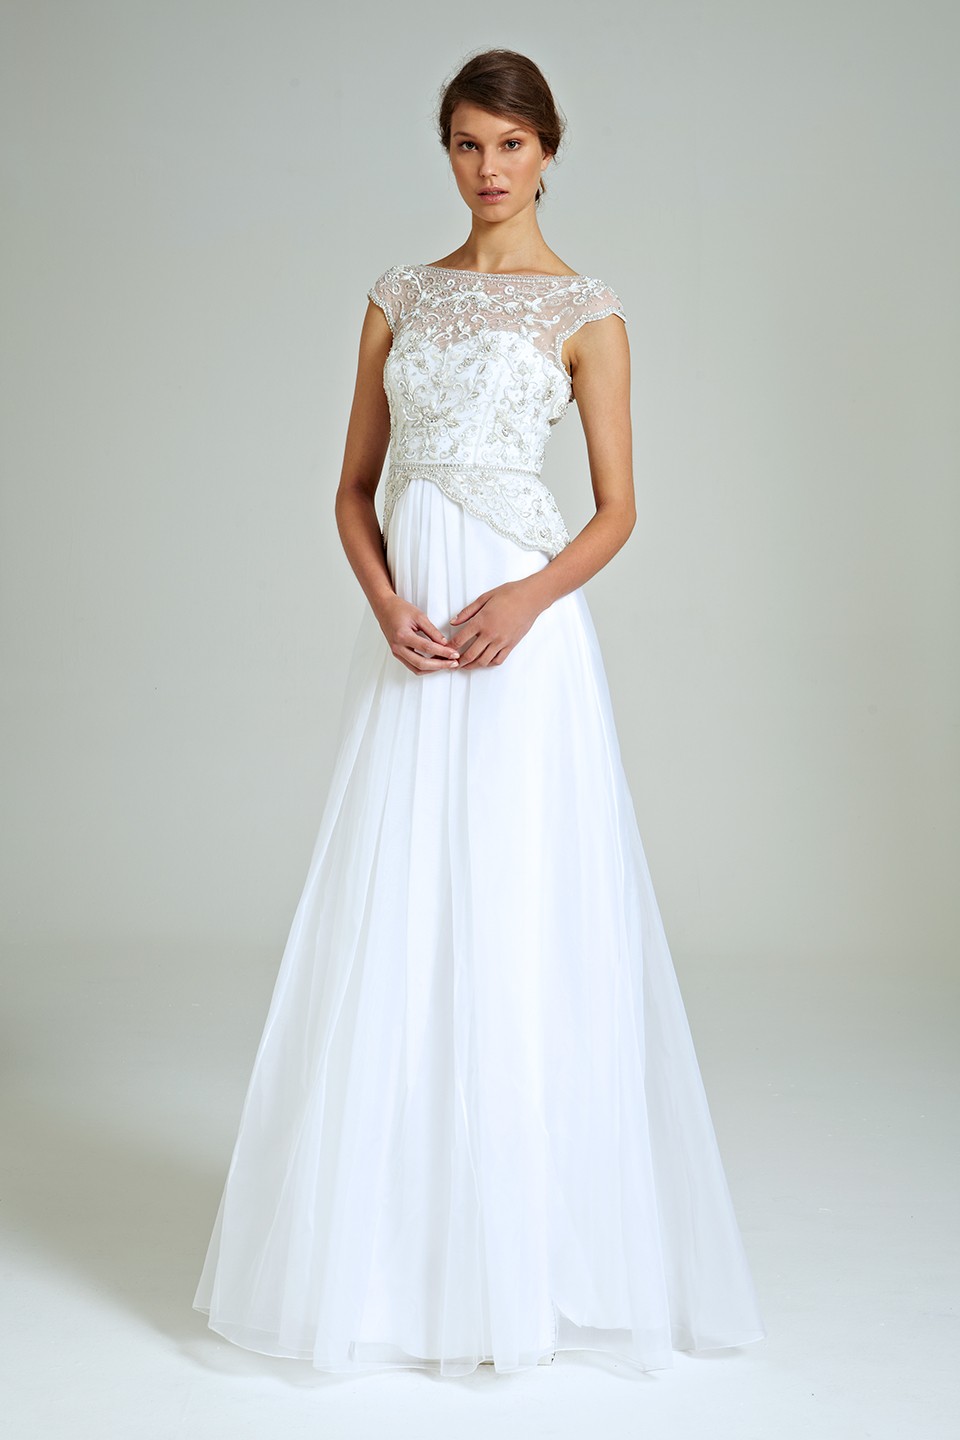 Collette Dinnigan Fairy Sequins Wedding Dress on Sale 50% Off